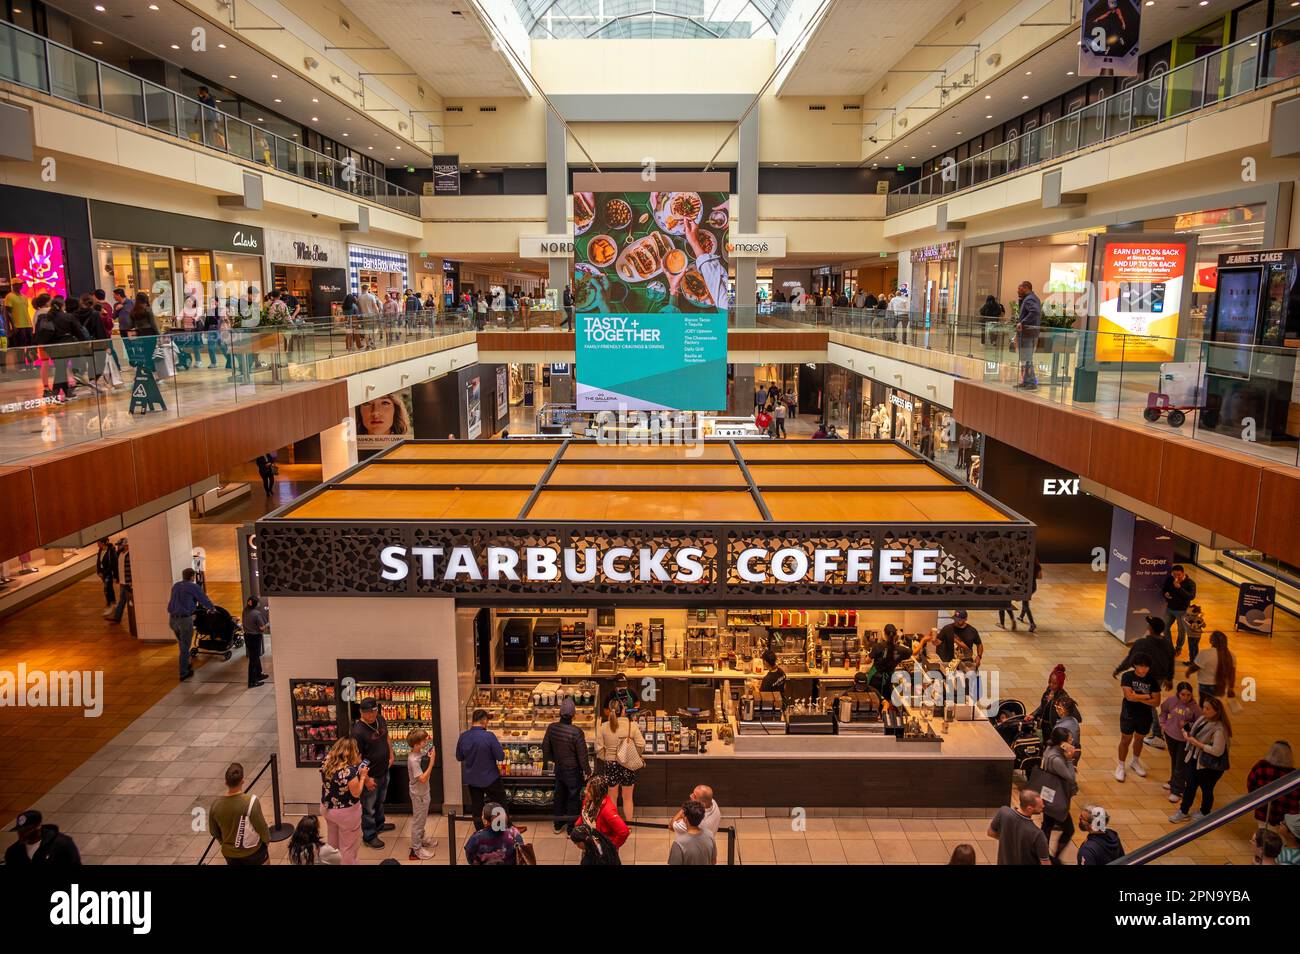 Hoston, Texas - April 8, 2023: Inside the Galleria shopping mall in Houston, Stock Photo